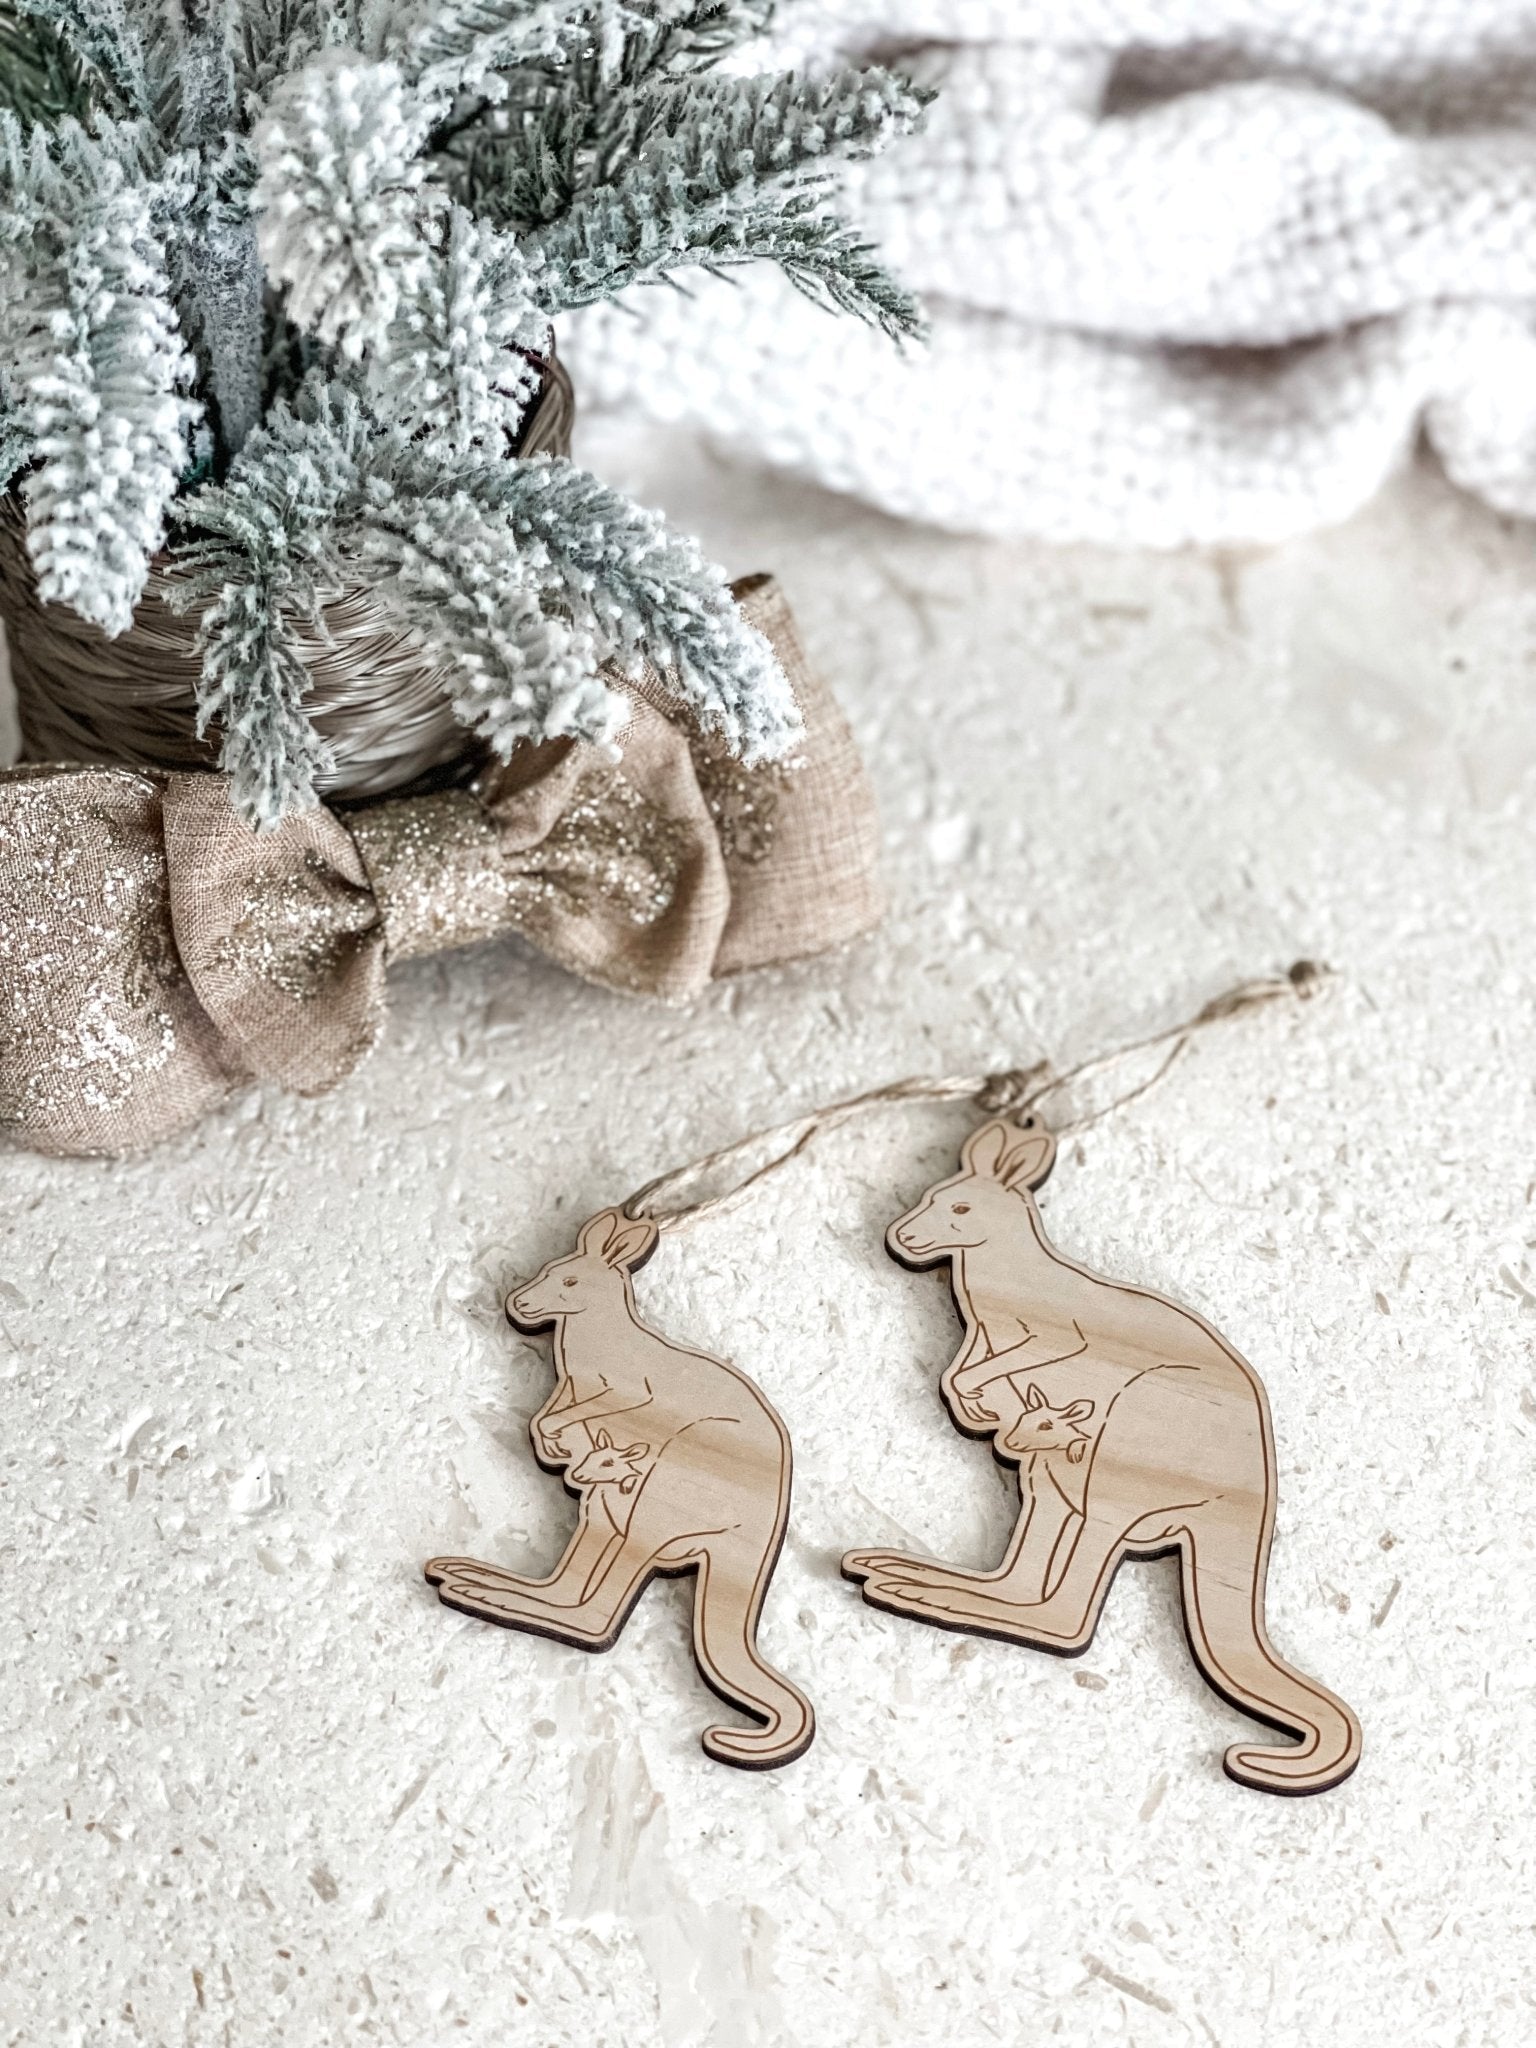 Aussie Animal Ornament - Kangaroo - The Humble Gift Co.